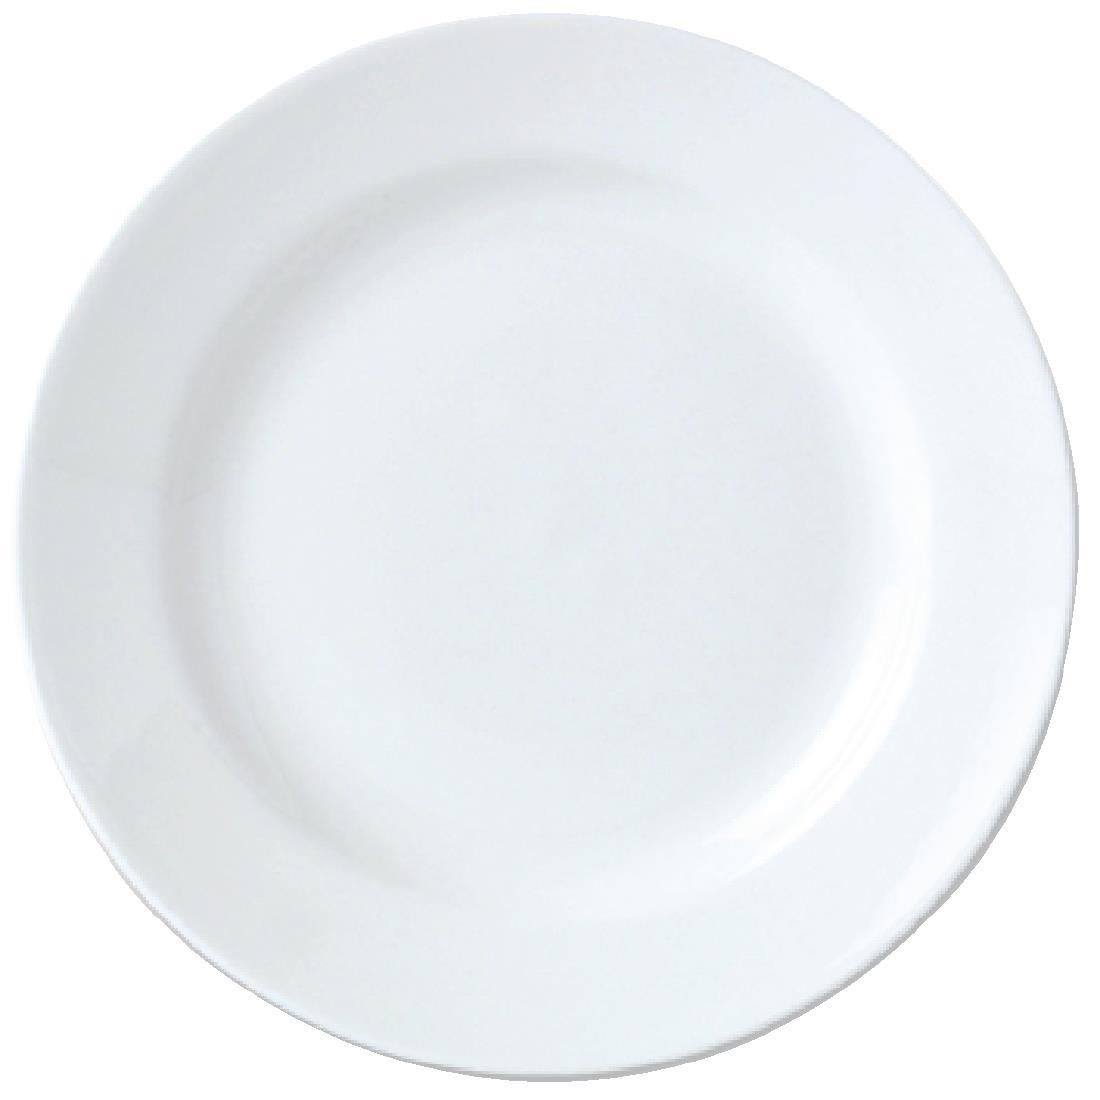 Steelite Simplicity White Harmony Plates 207mm (Pack of 24) - V9253  - 1